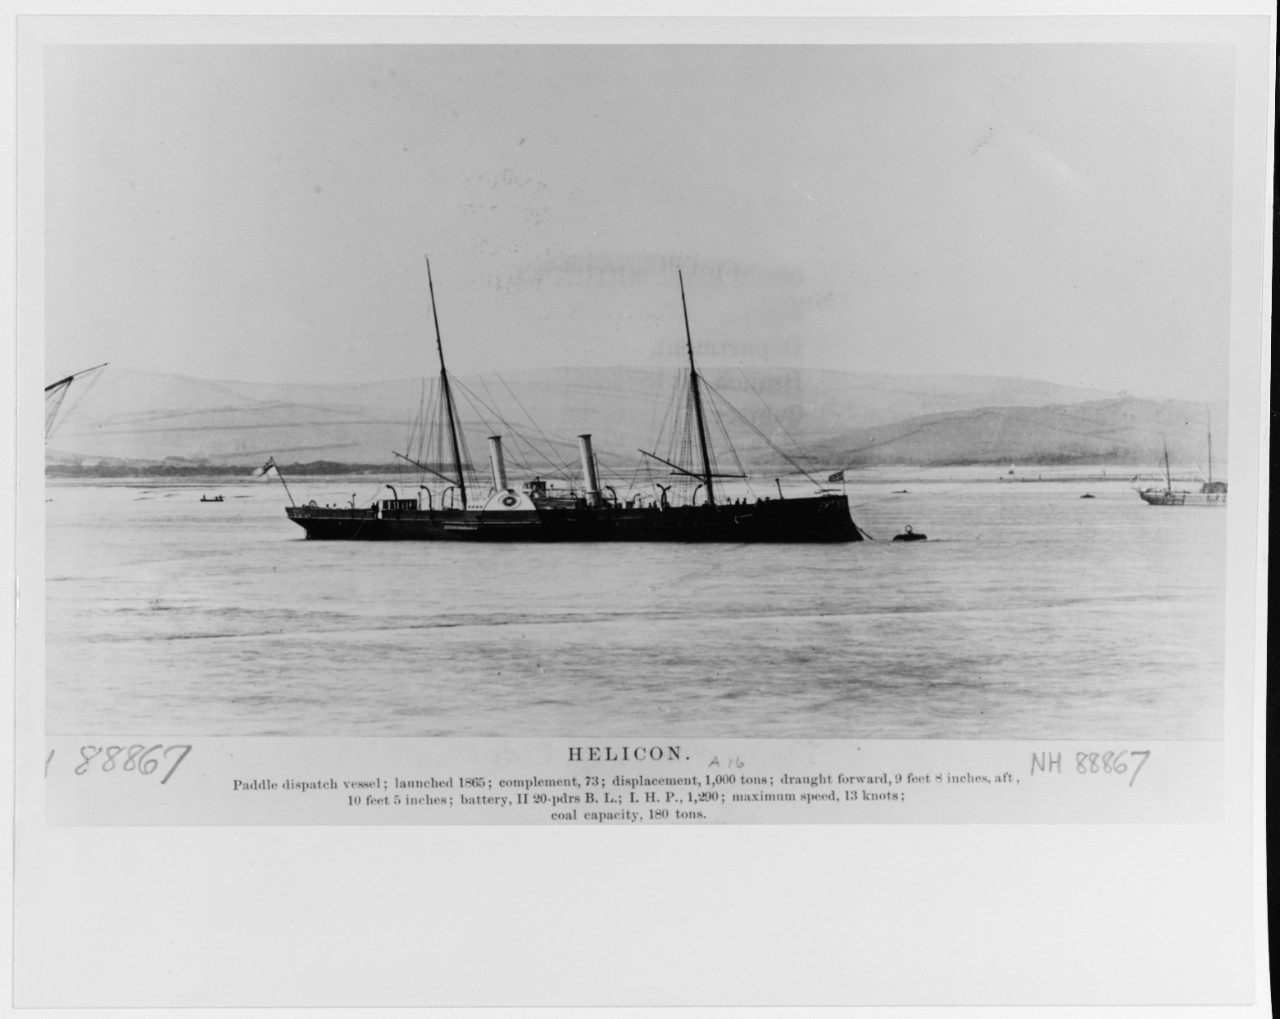 HELICON (British paddle despatch vessel, 1865-1905)